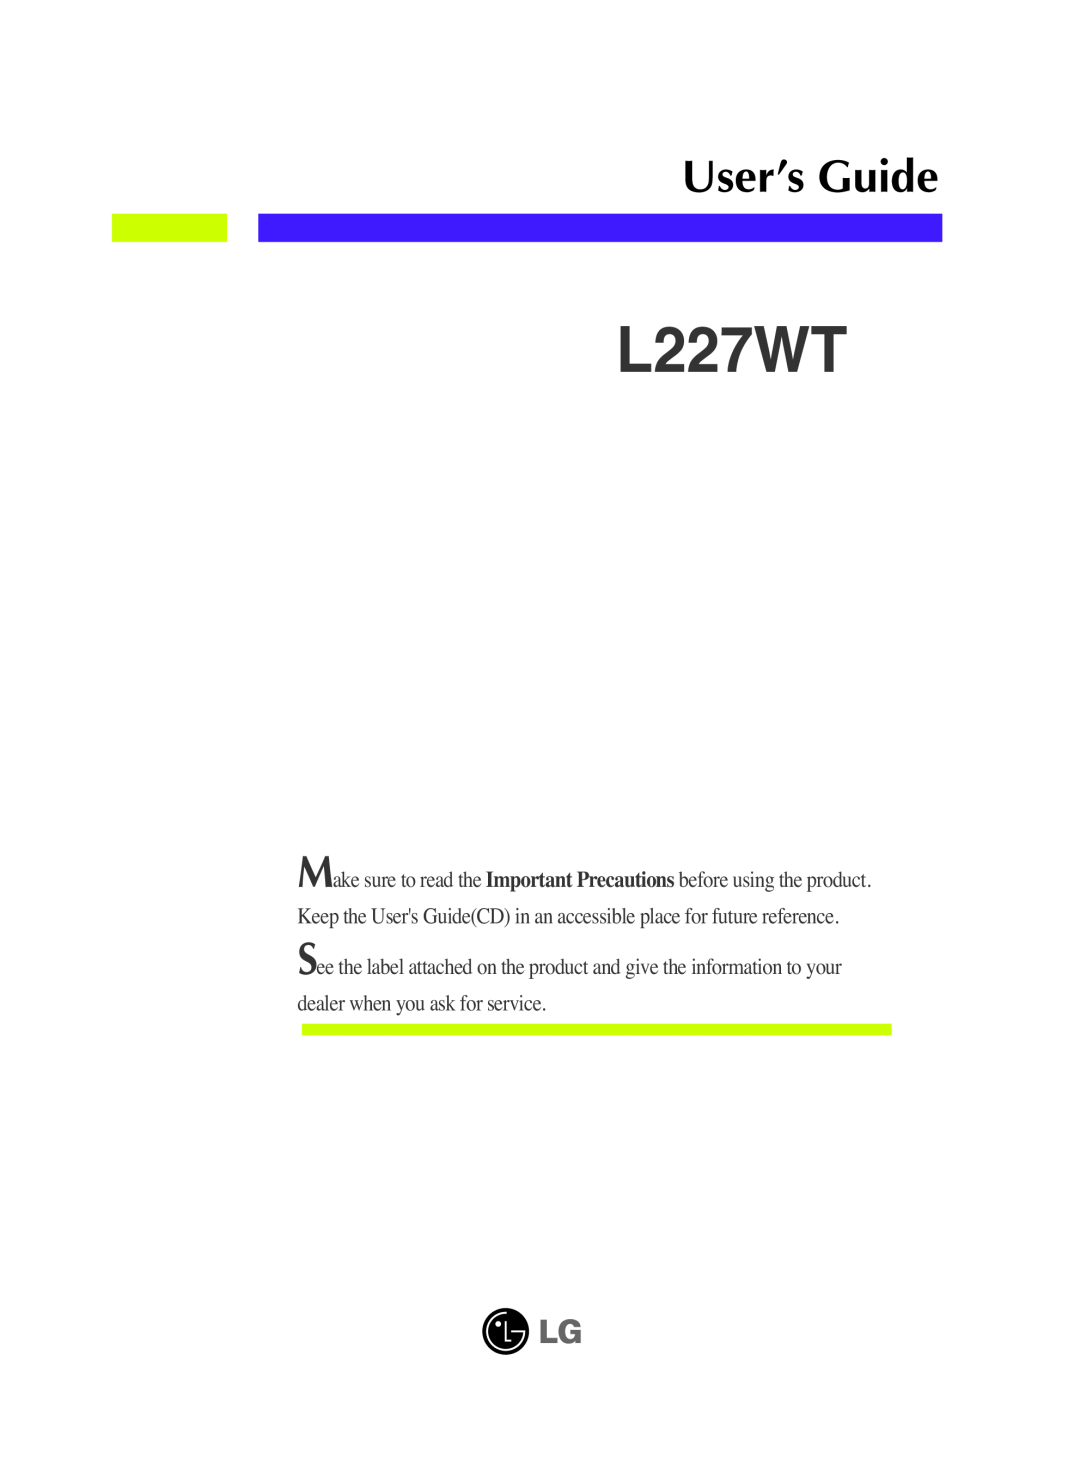 LG Electronics L227WT manual User’s Guide 